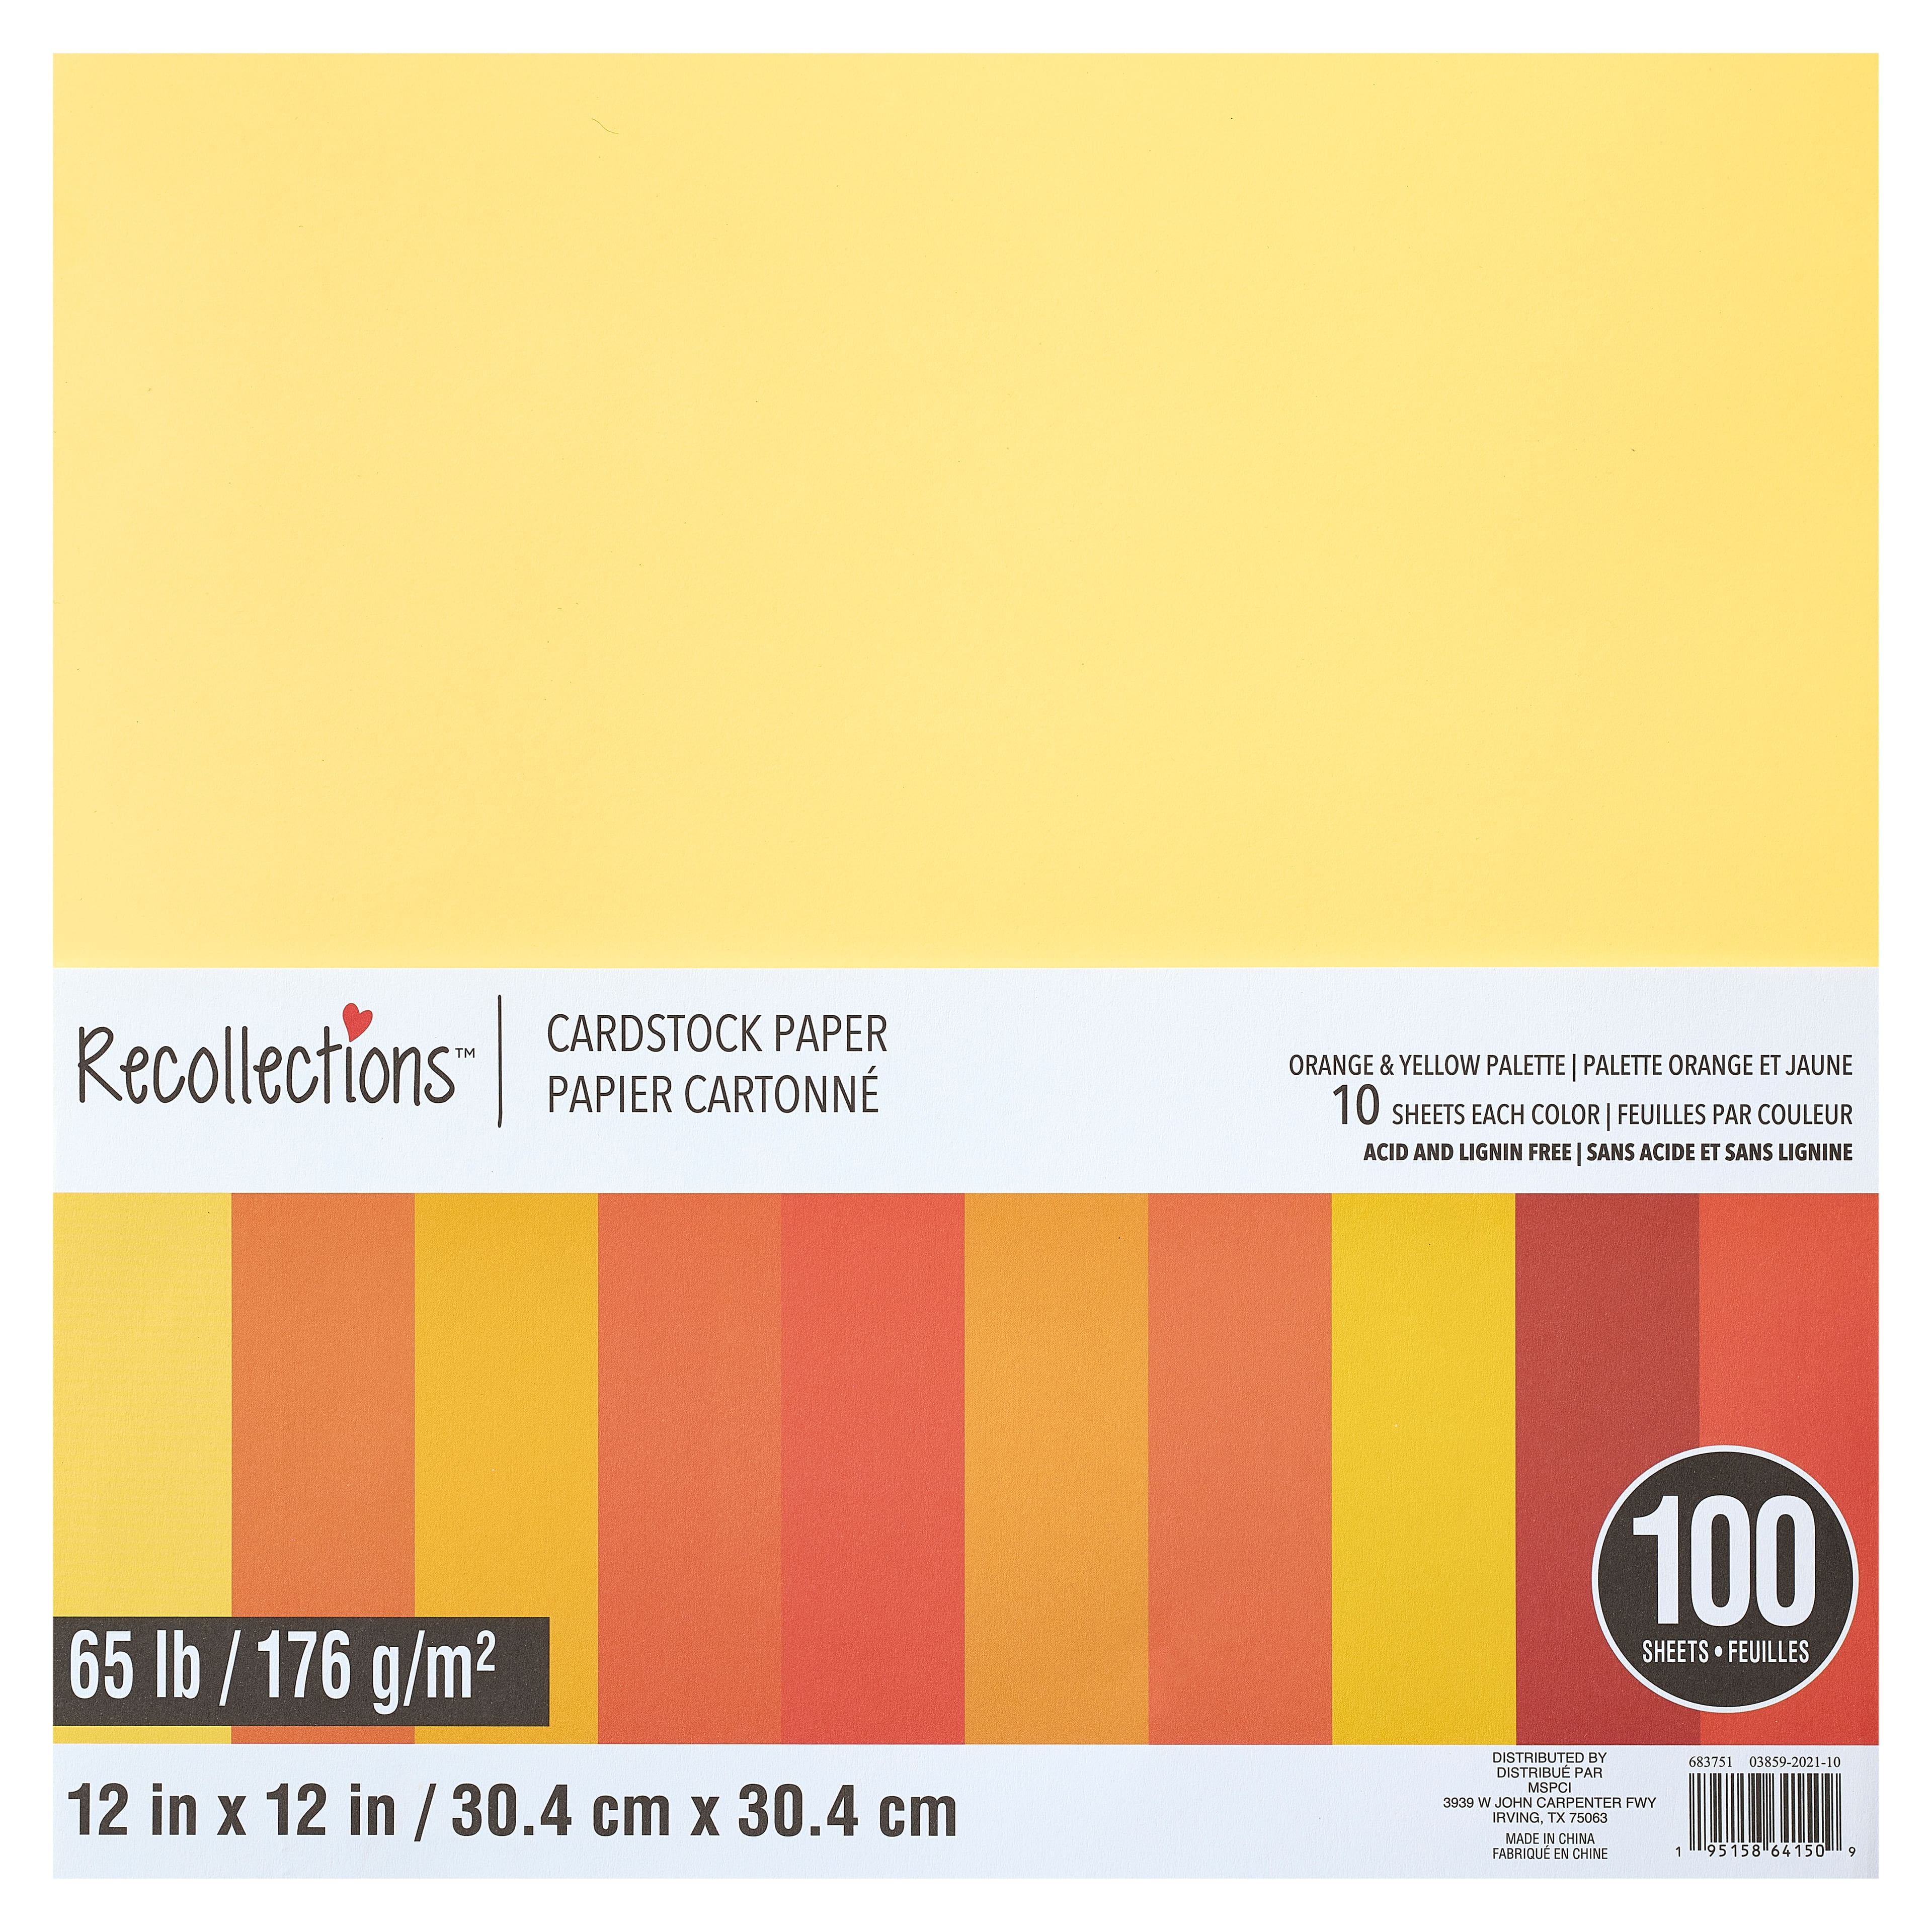 9 Packs: 100 ct. (900 total) Orange & Yellow Palette 12 x 12